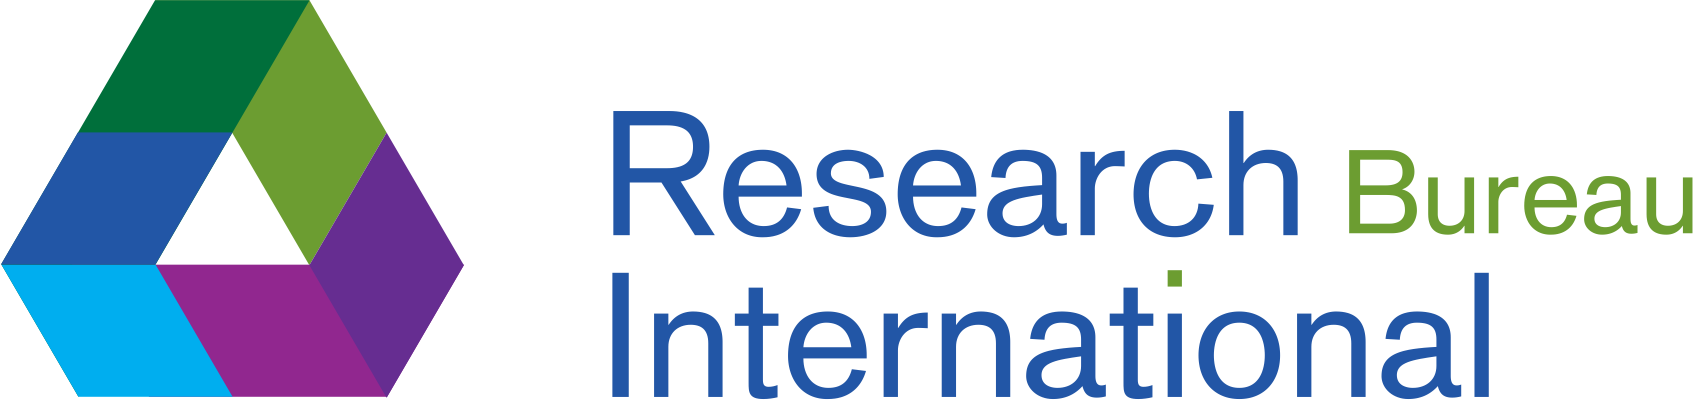 Research Bureau International